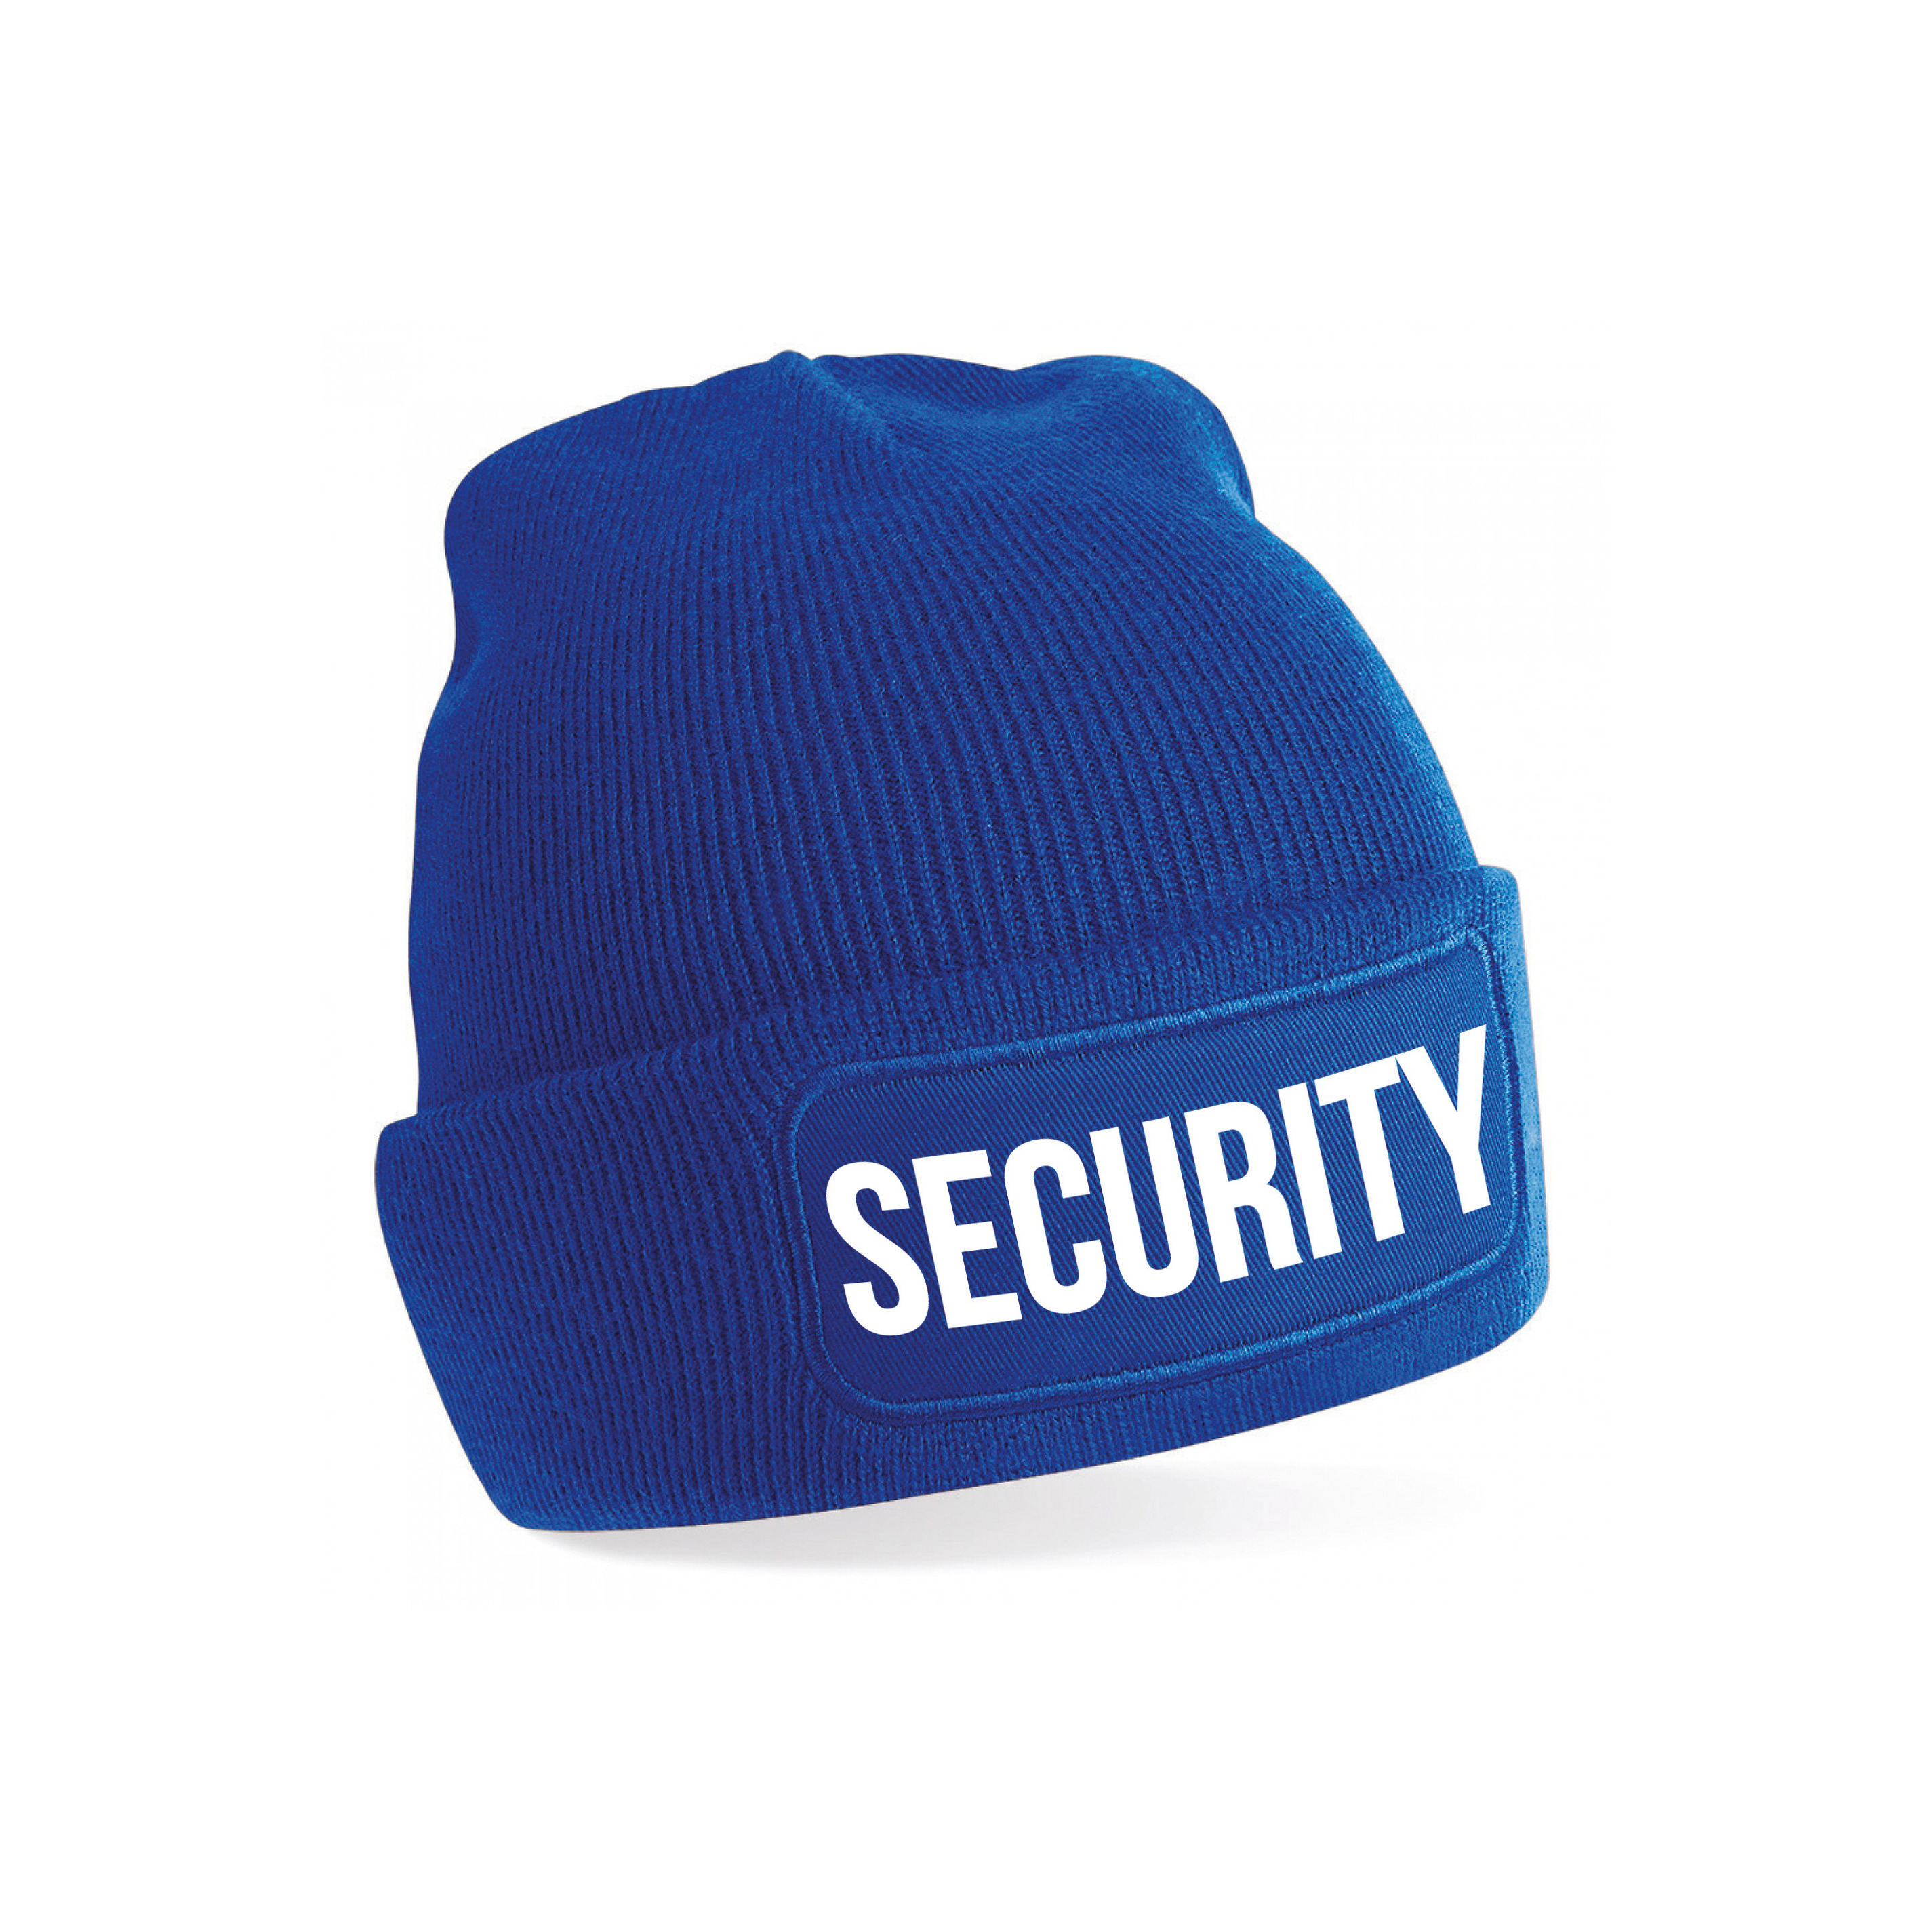 Security muts unisex - one size - blauw - apres-ski muts One size -